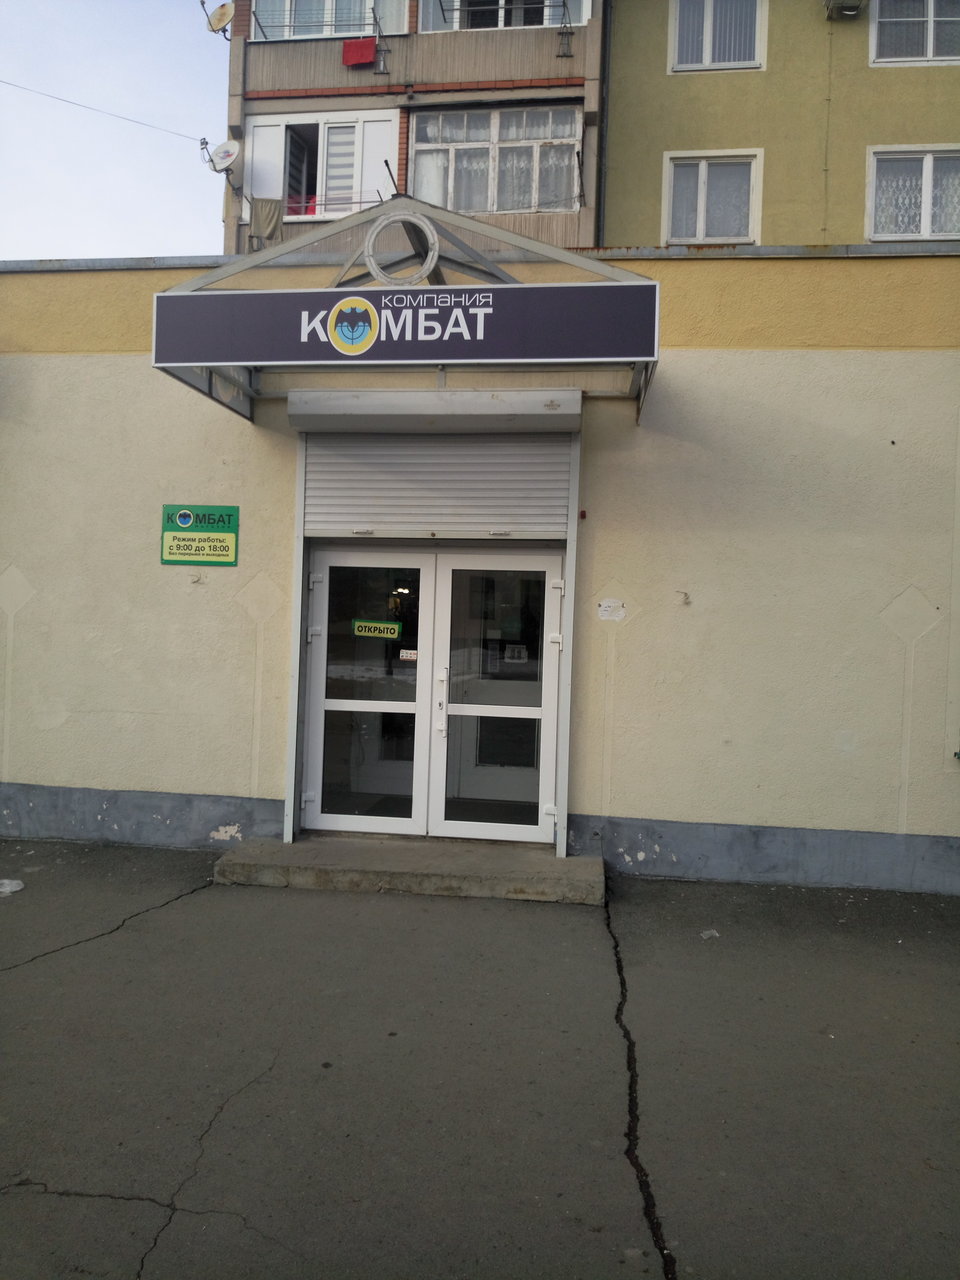 Армейский магазин "Комбат" на Куйбышева во Владикавказе